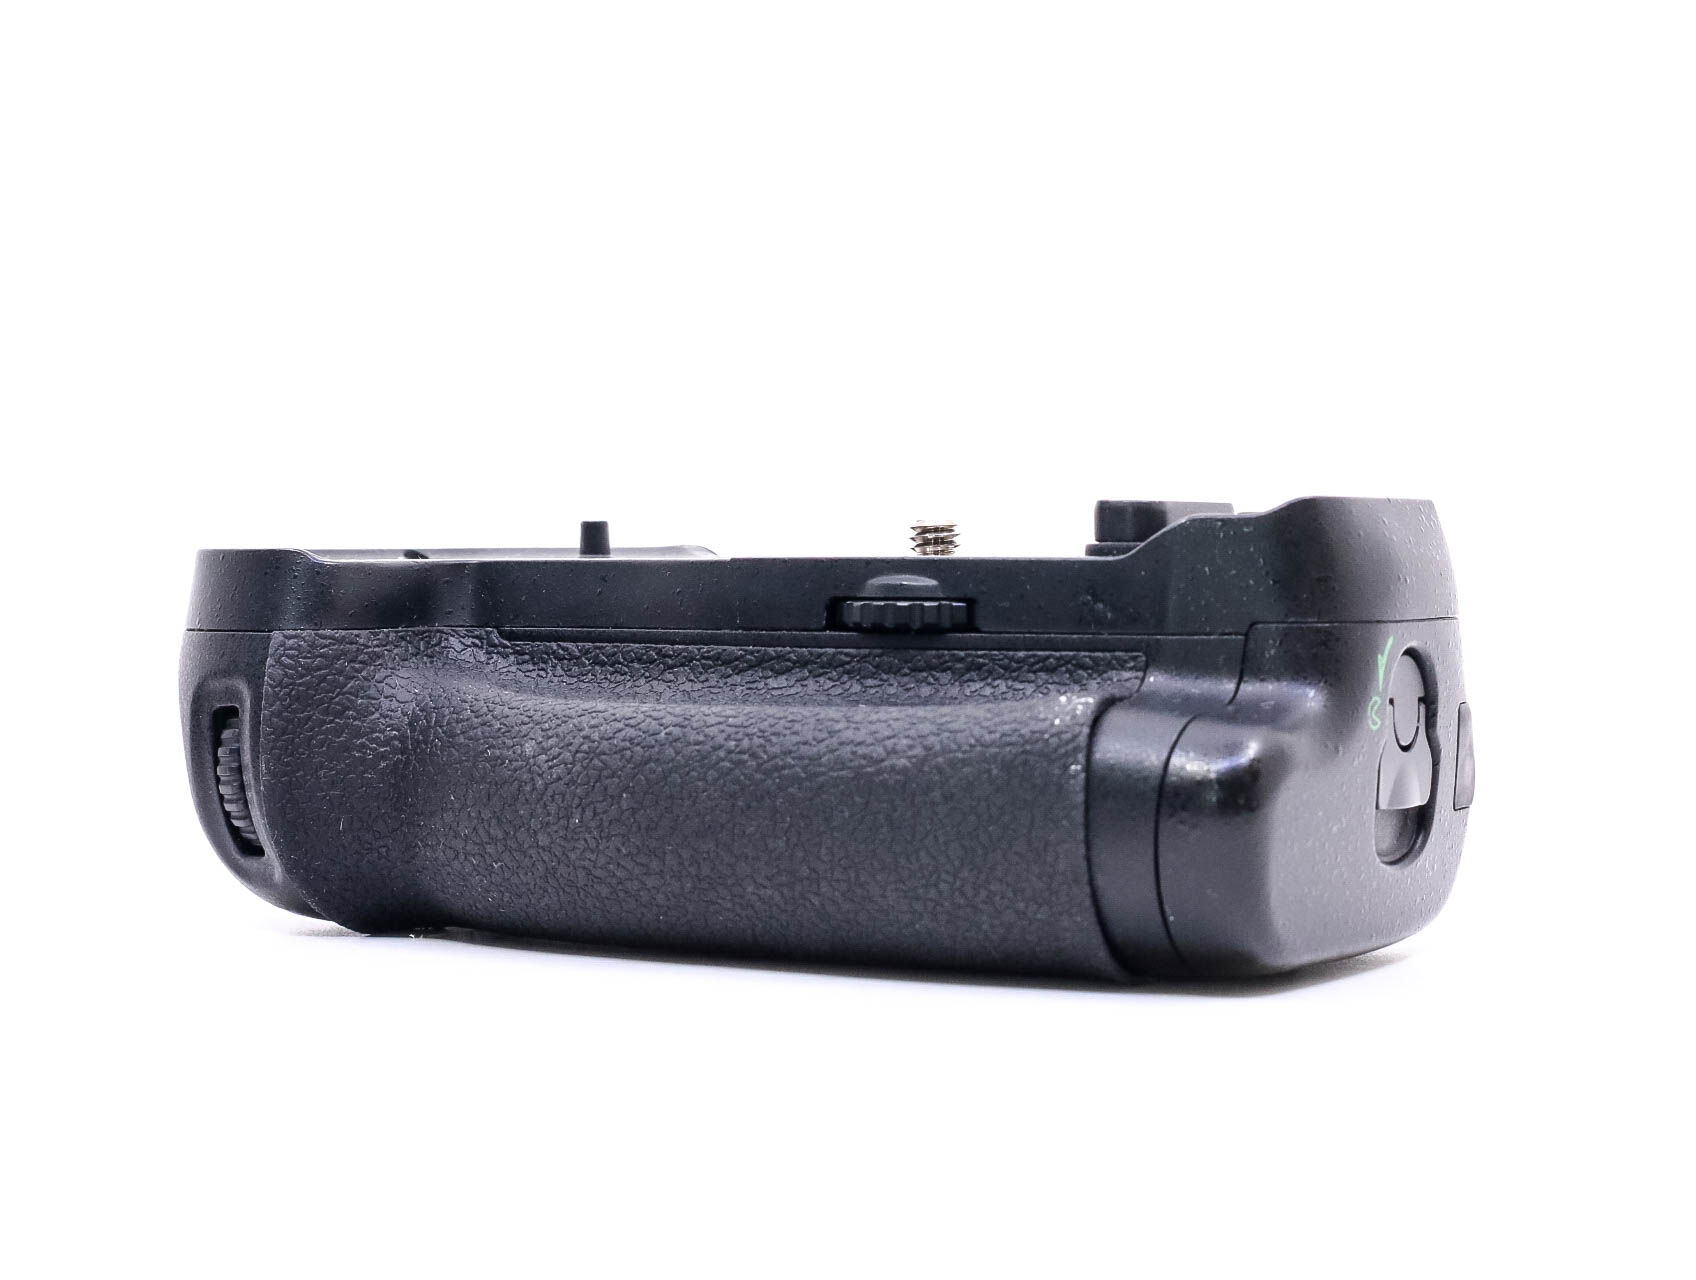 Nikon MB-D18 Battery Grip (Condition: Good)